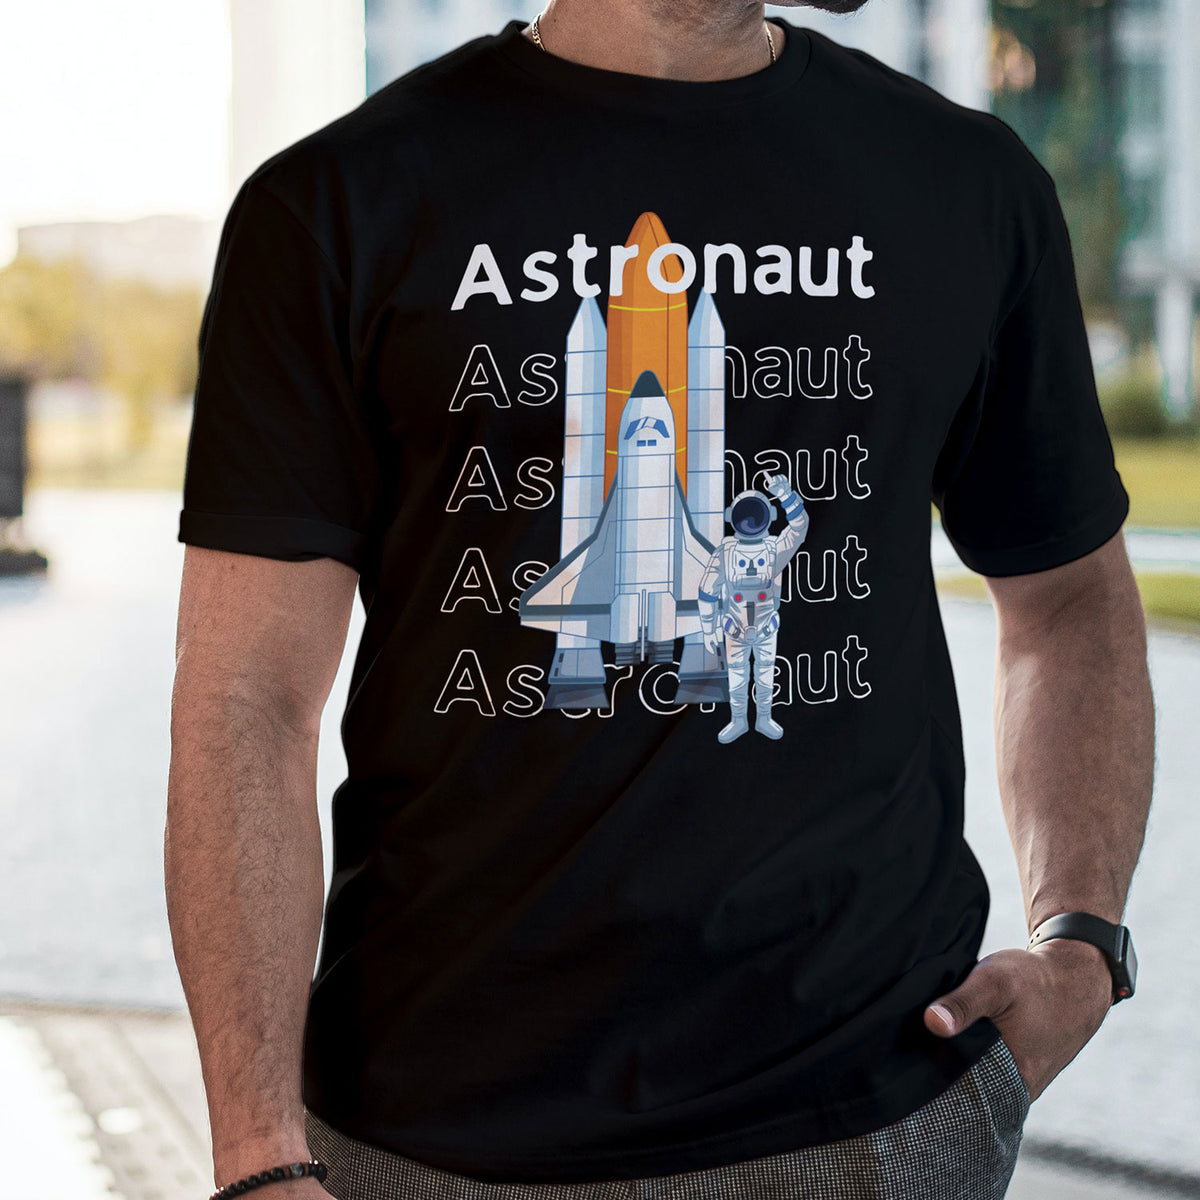 Astronaut Black Printed T-shirt For Men